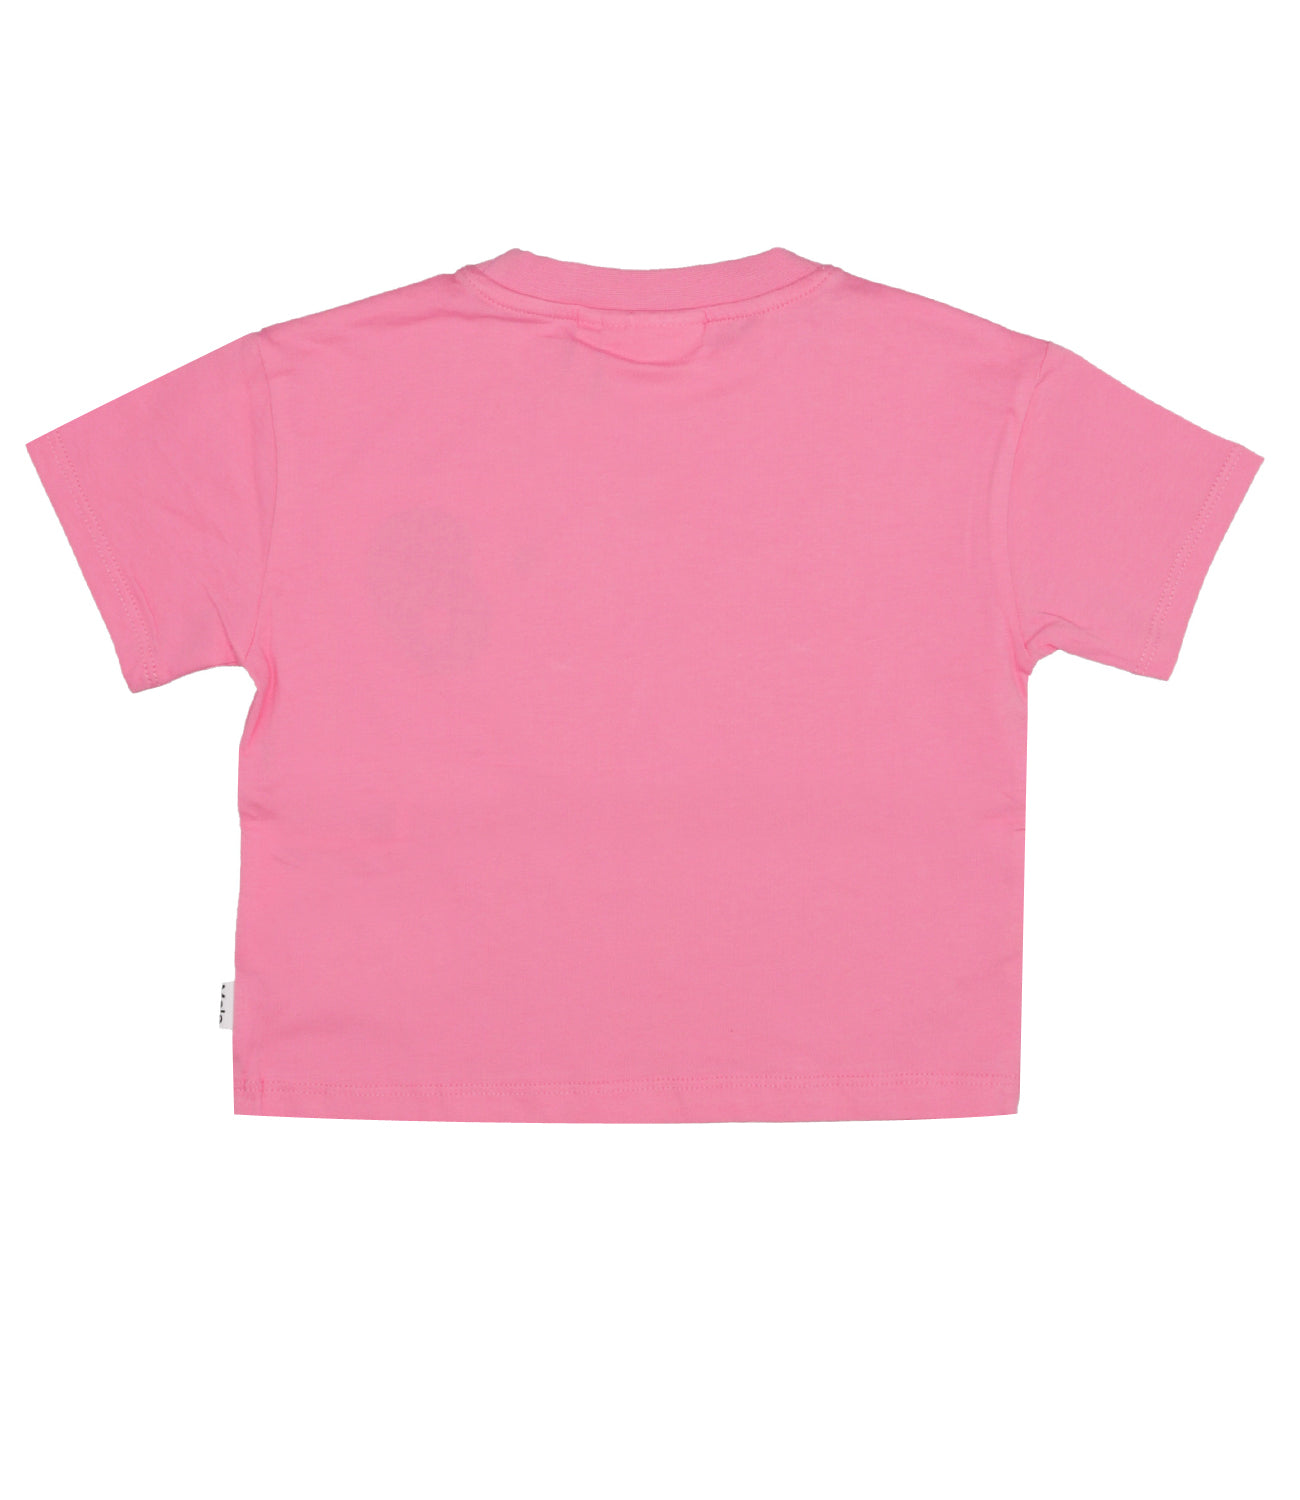 Molo | Pink T-Shirt